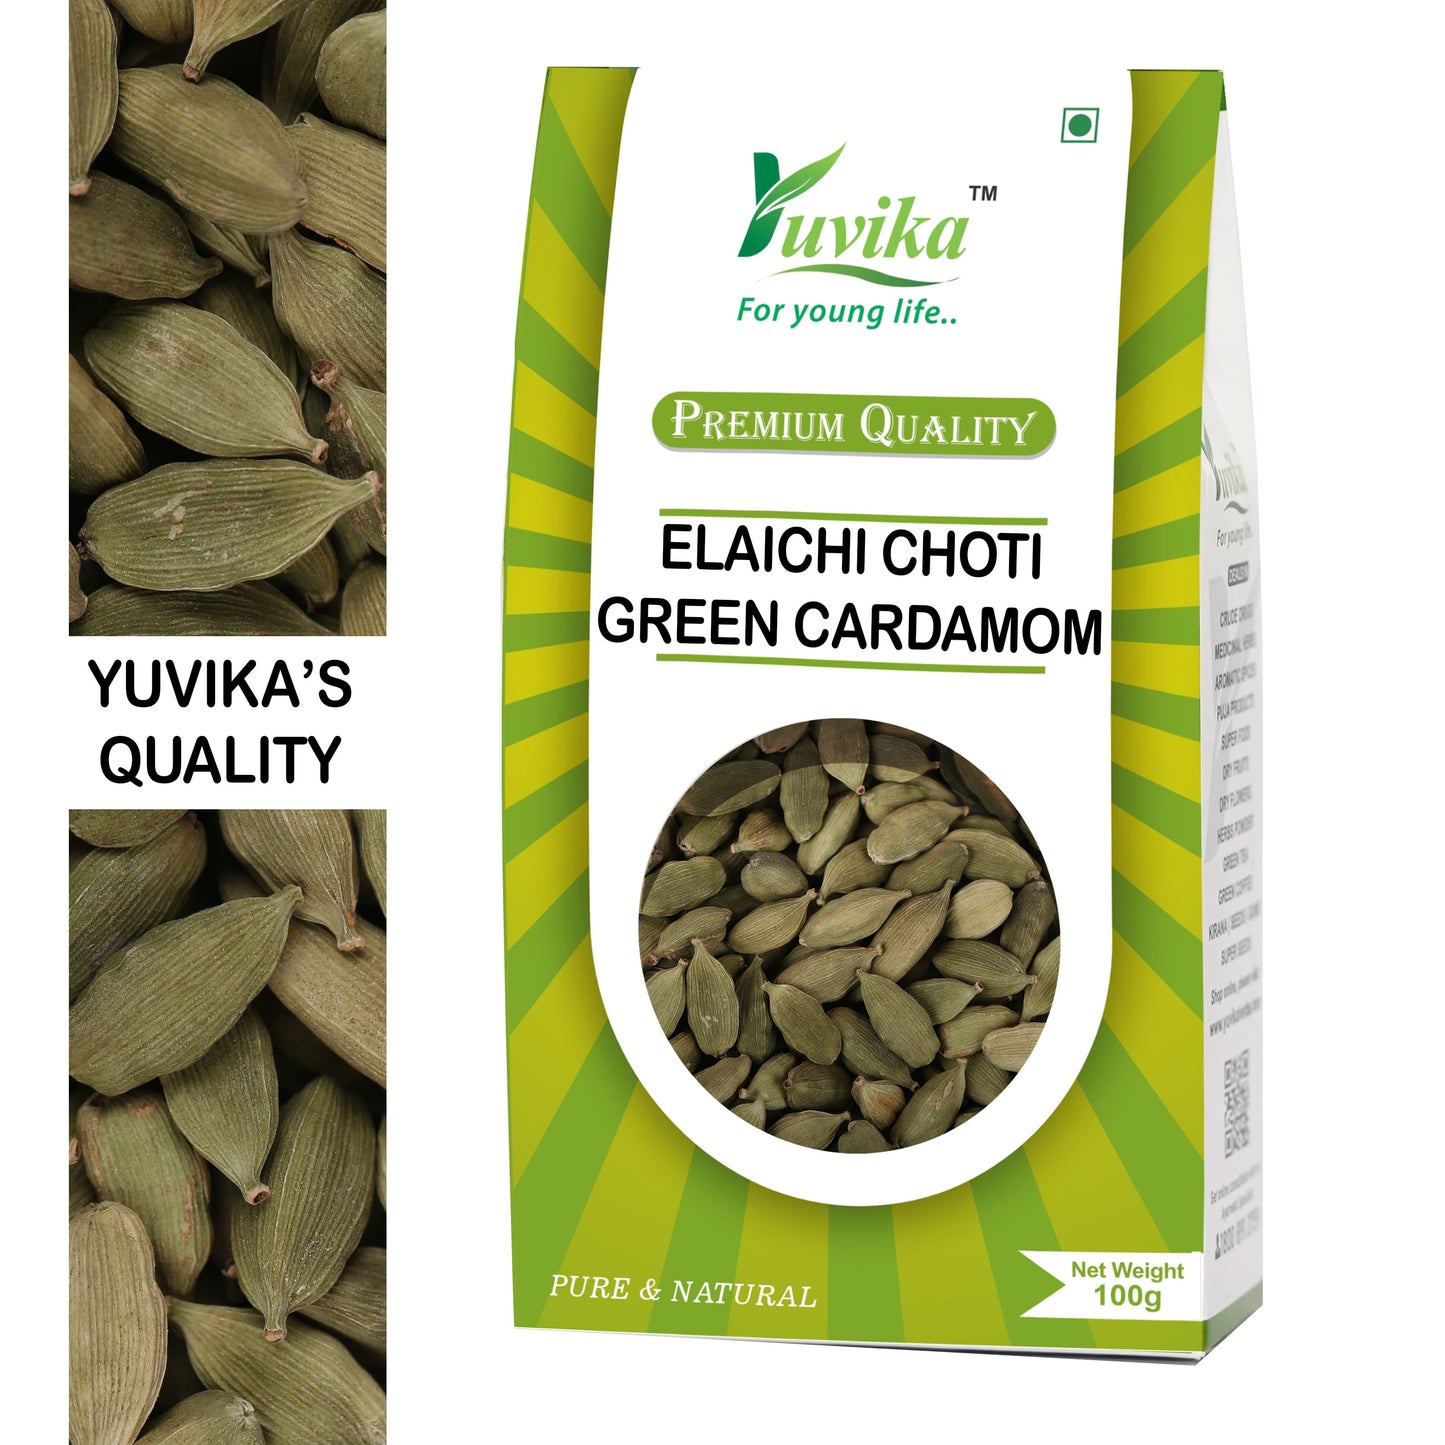 Elaichi Choti - Elachi Choti  - Elettaria cardamomum - Green Cardamom Small (100g)